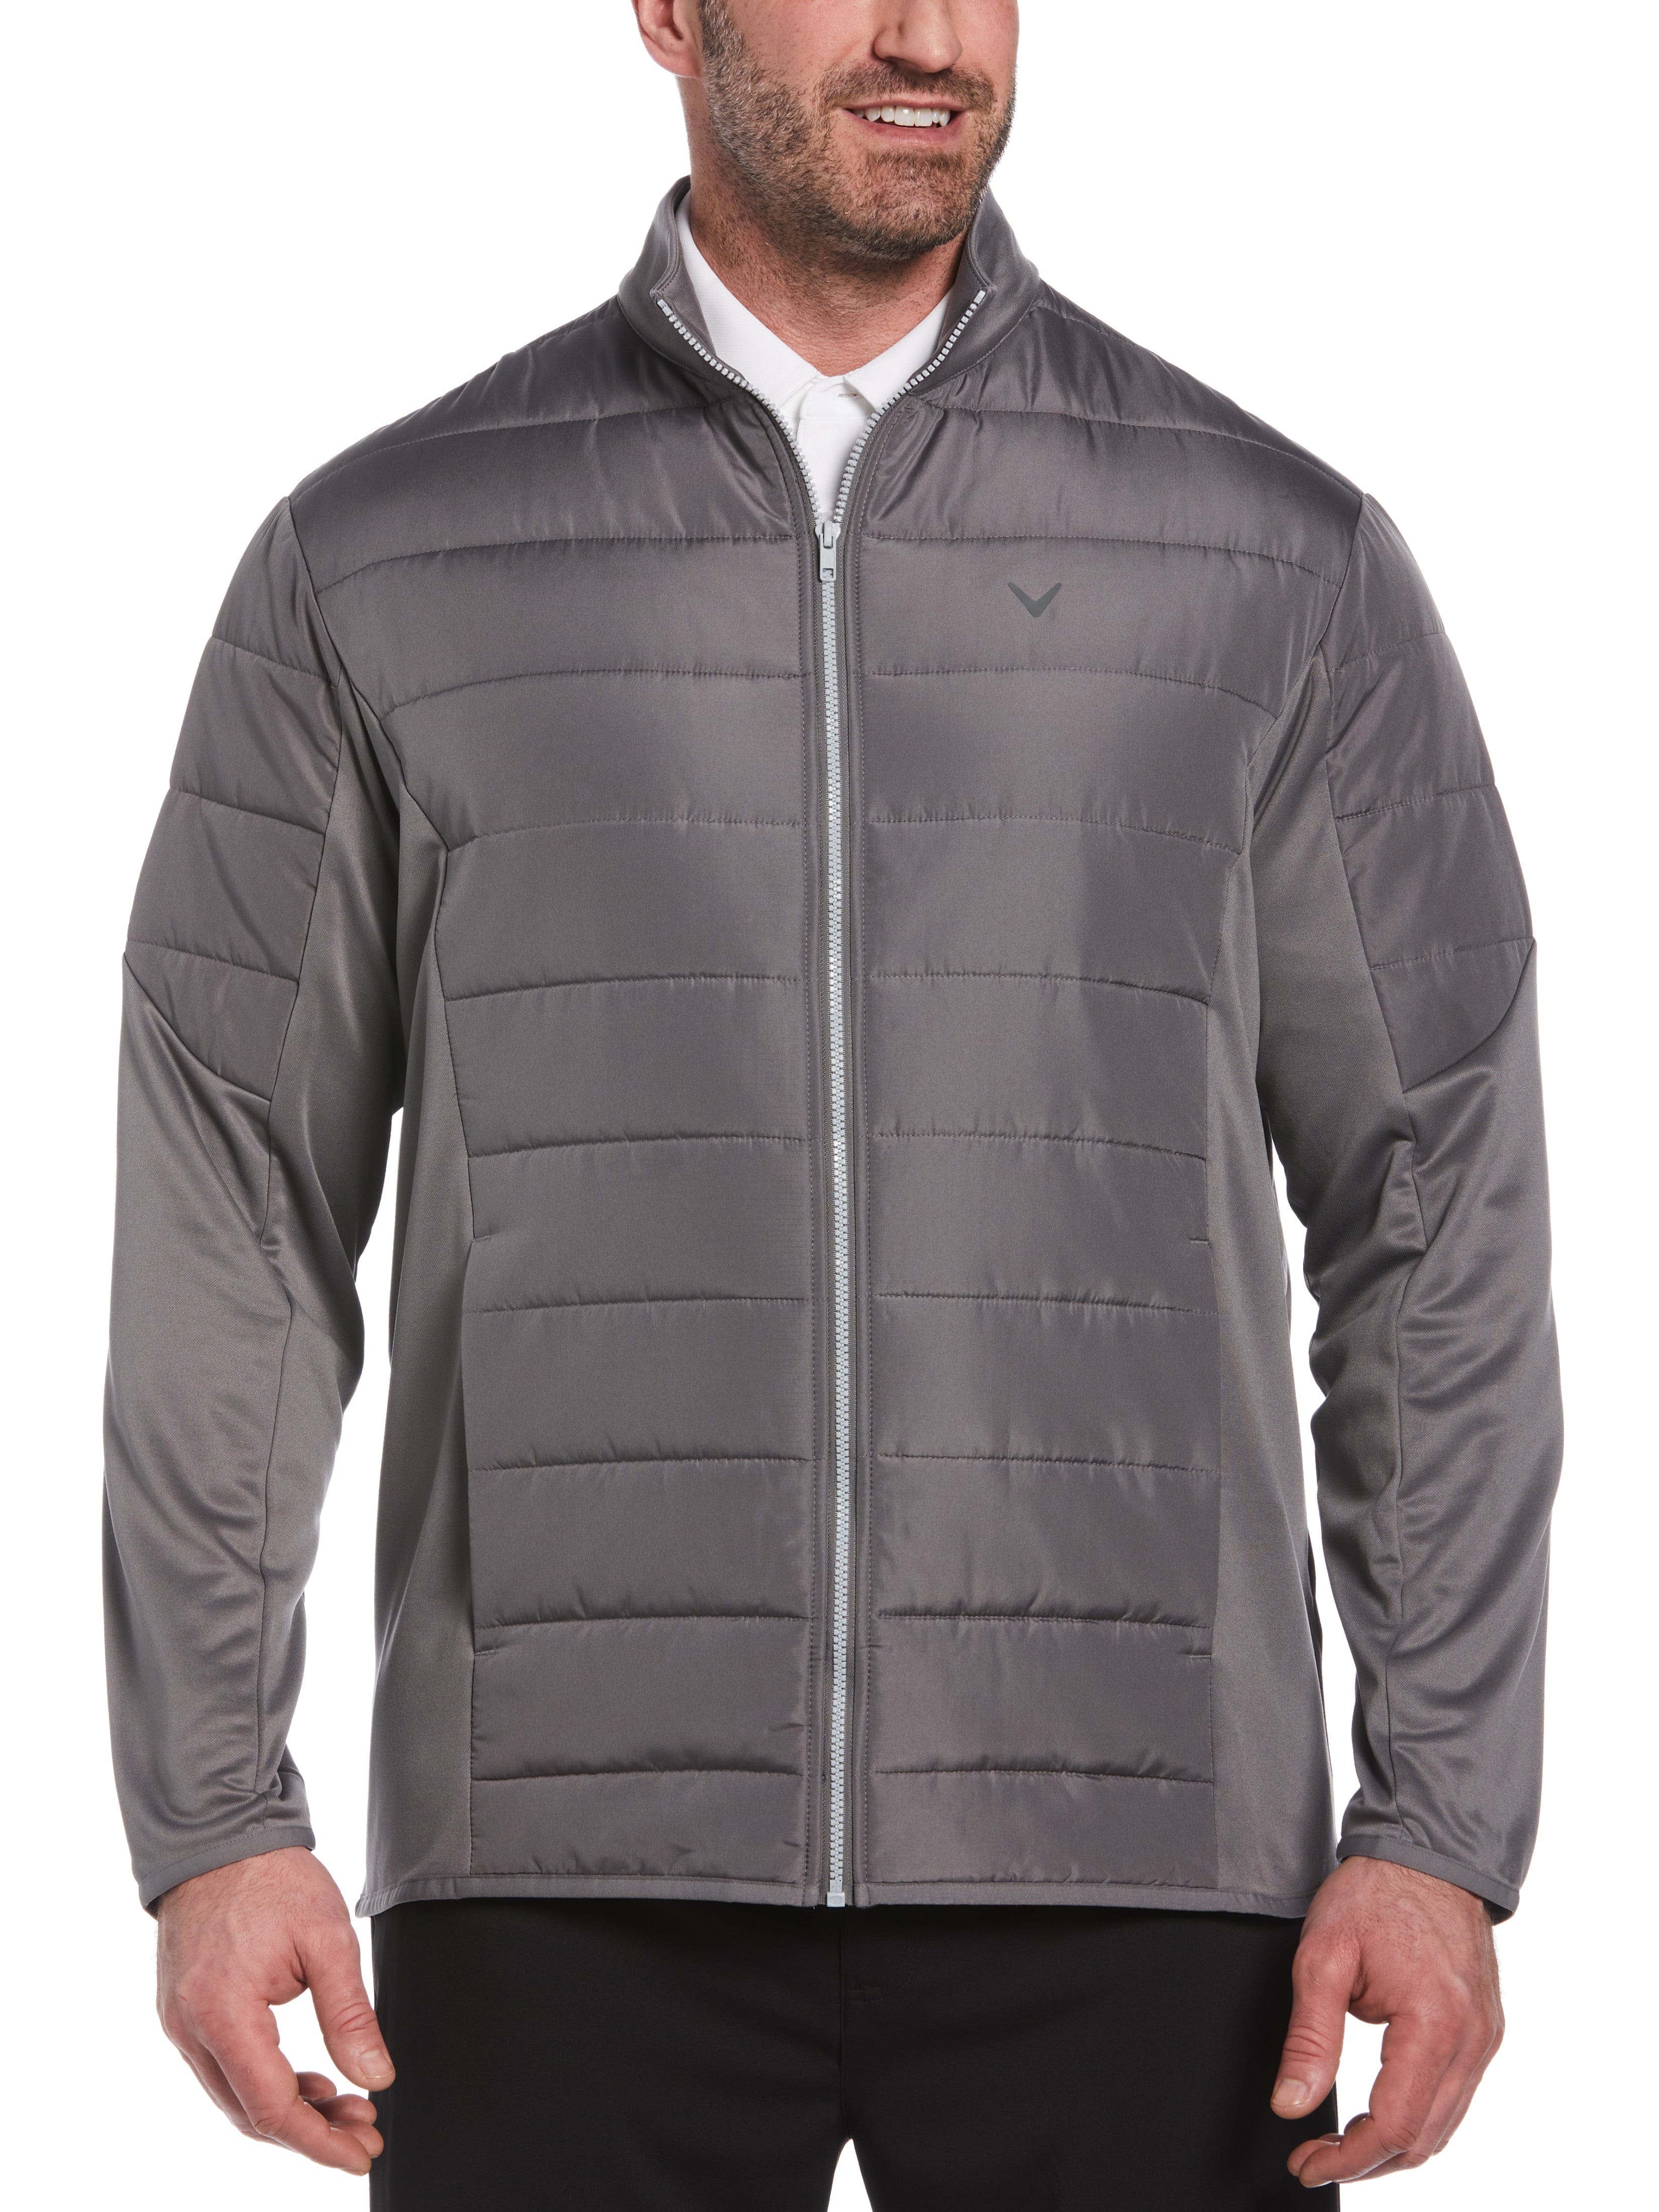 Callaway Apparel Mens Big & Tall Hybrid Performance Puffer Jacket Top, Size 3X, Quiet Shade Gray, 100% Polyester | Golf Apparel Shop